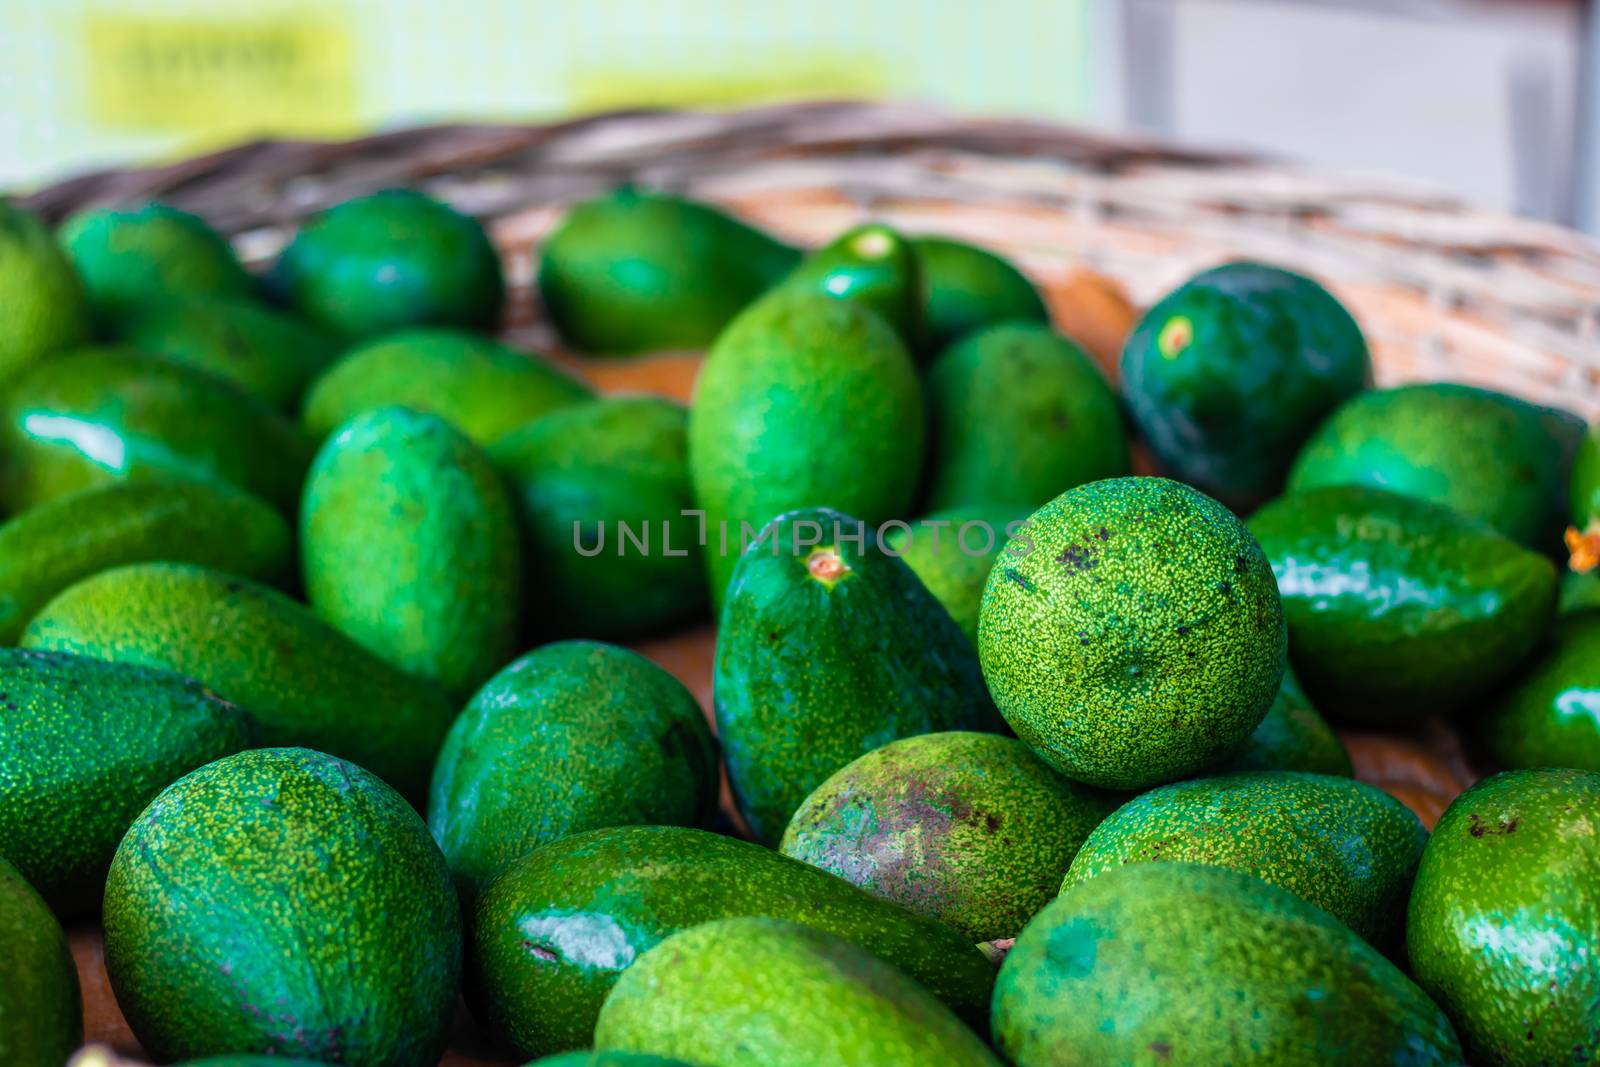 closeup shoot to good looking lemons with pastel green color. photo has taken at izmir/turkey.